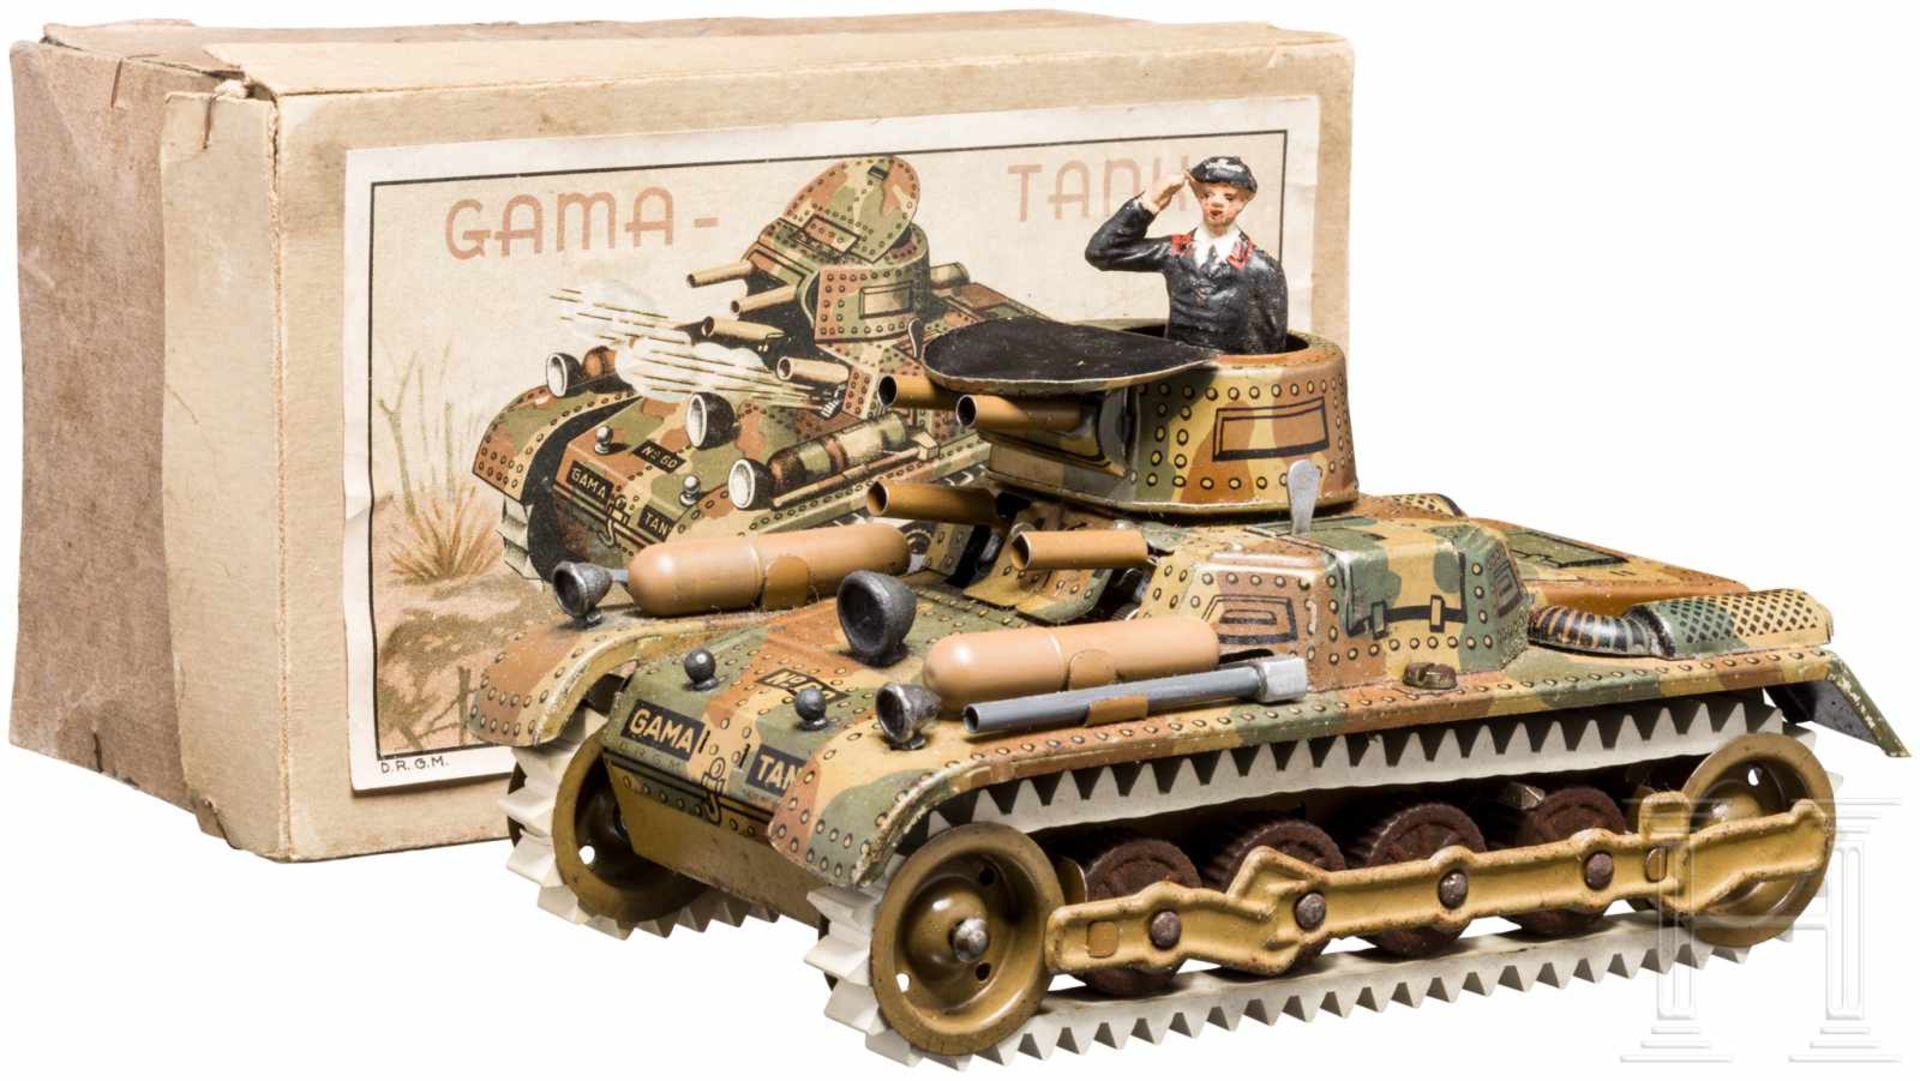 Gama - Panzer Feuertank No 60, im OriginalkartonGama/Georg Adam Mangold, Fürth, 7 cm-Serie, Blech-